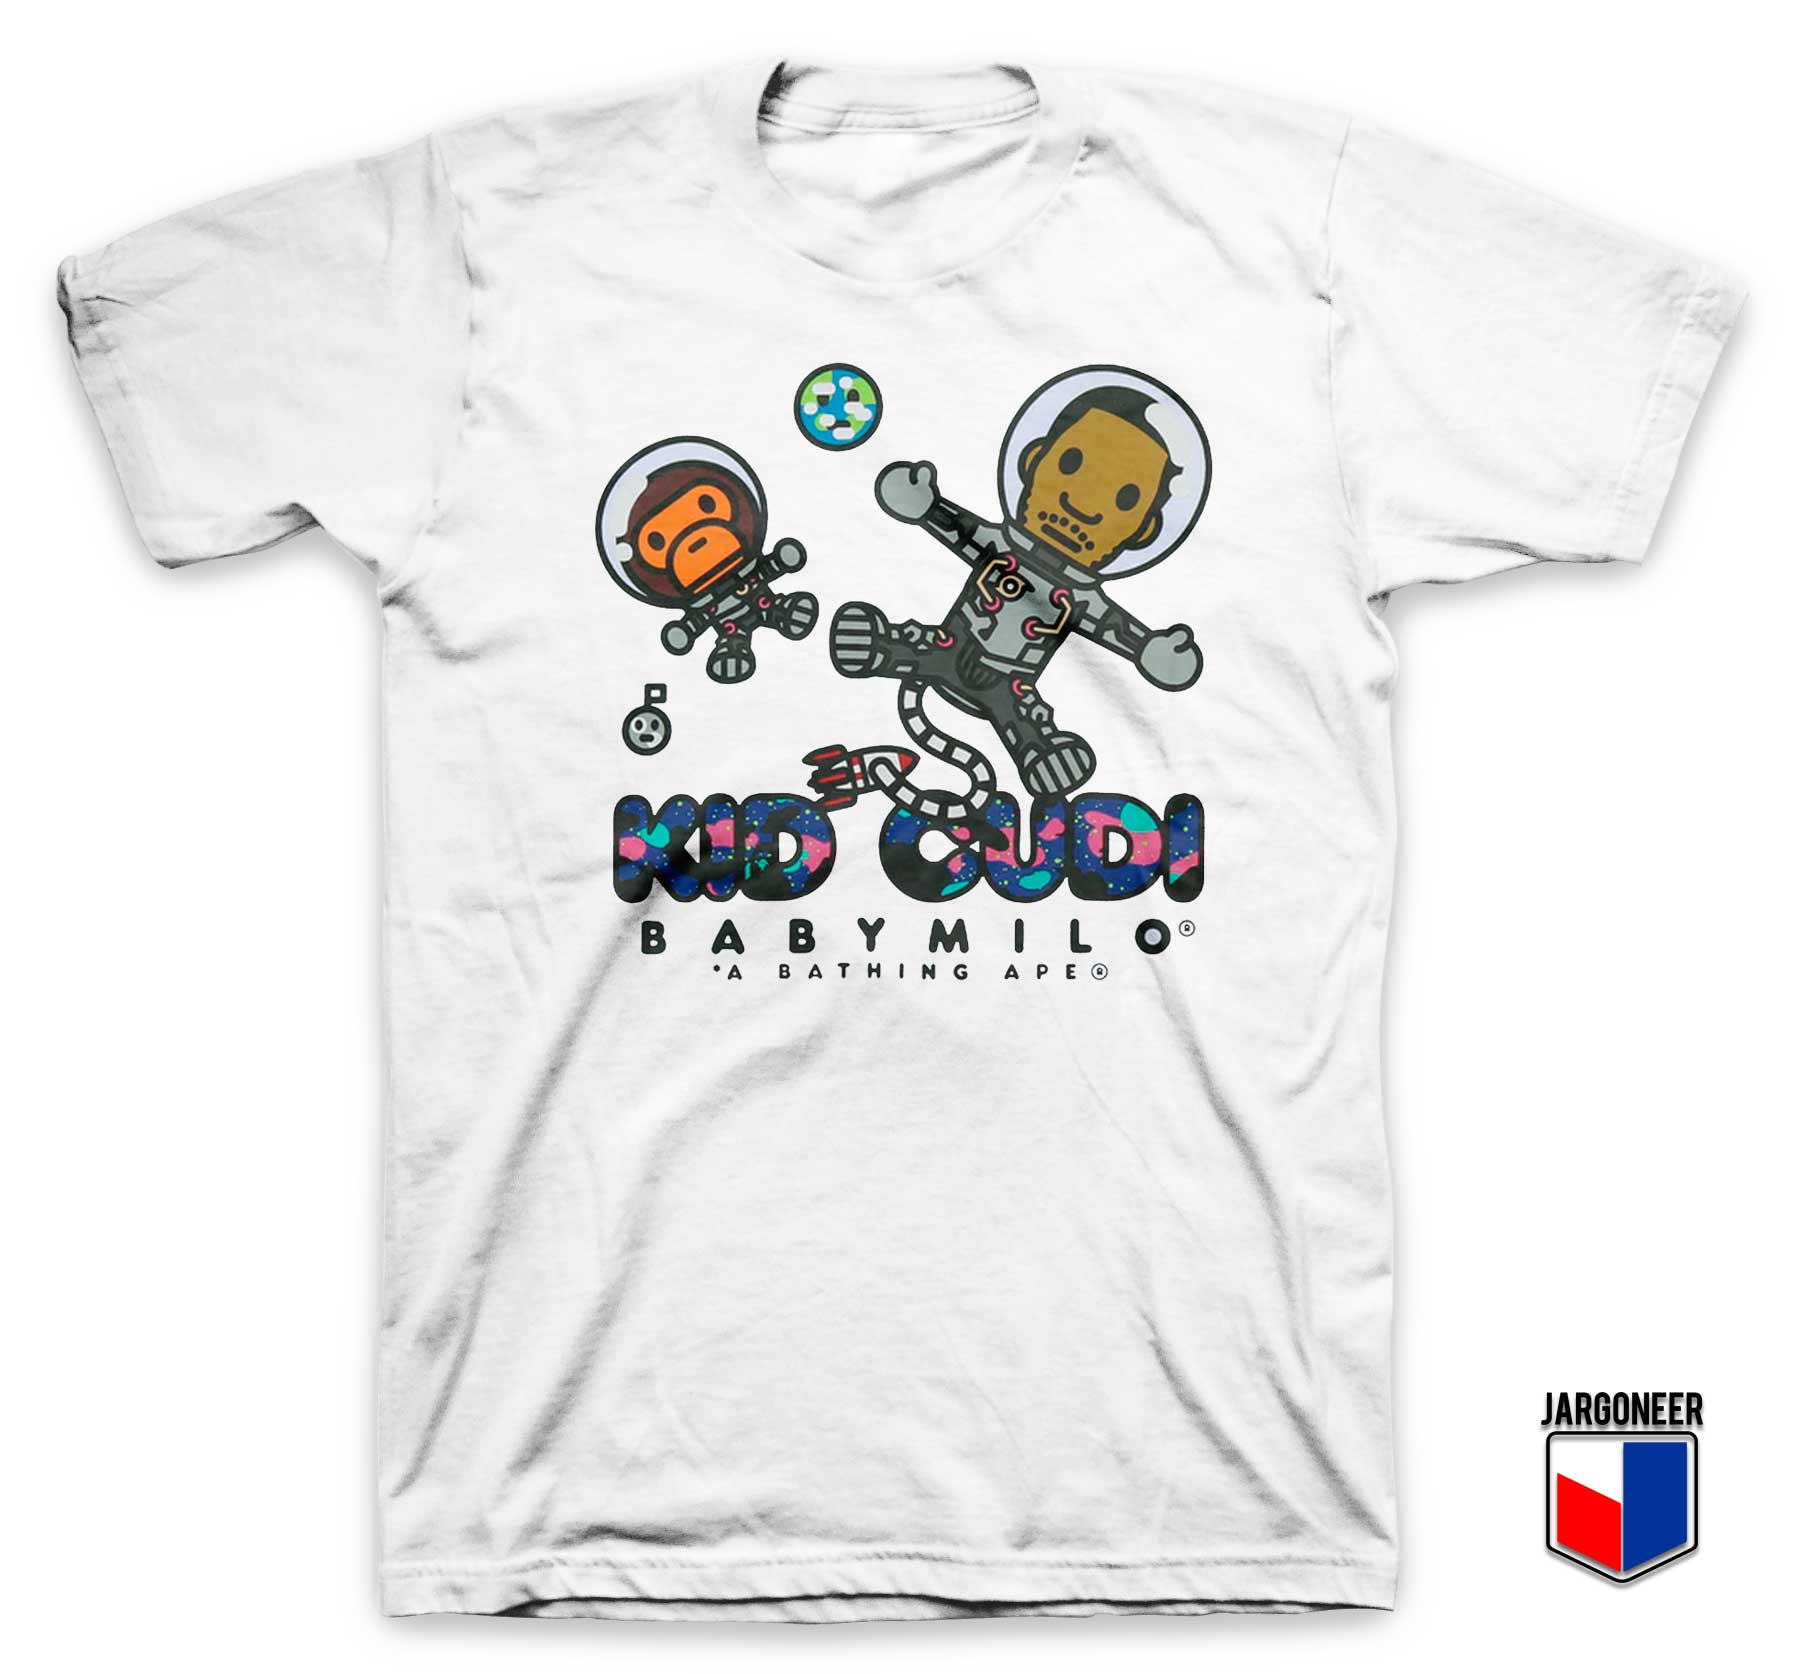 Kid Cudi Baby Milo Moon T Shirt - Shop Unique Graphic Cool Shirt Designs